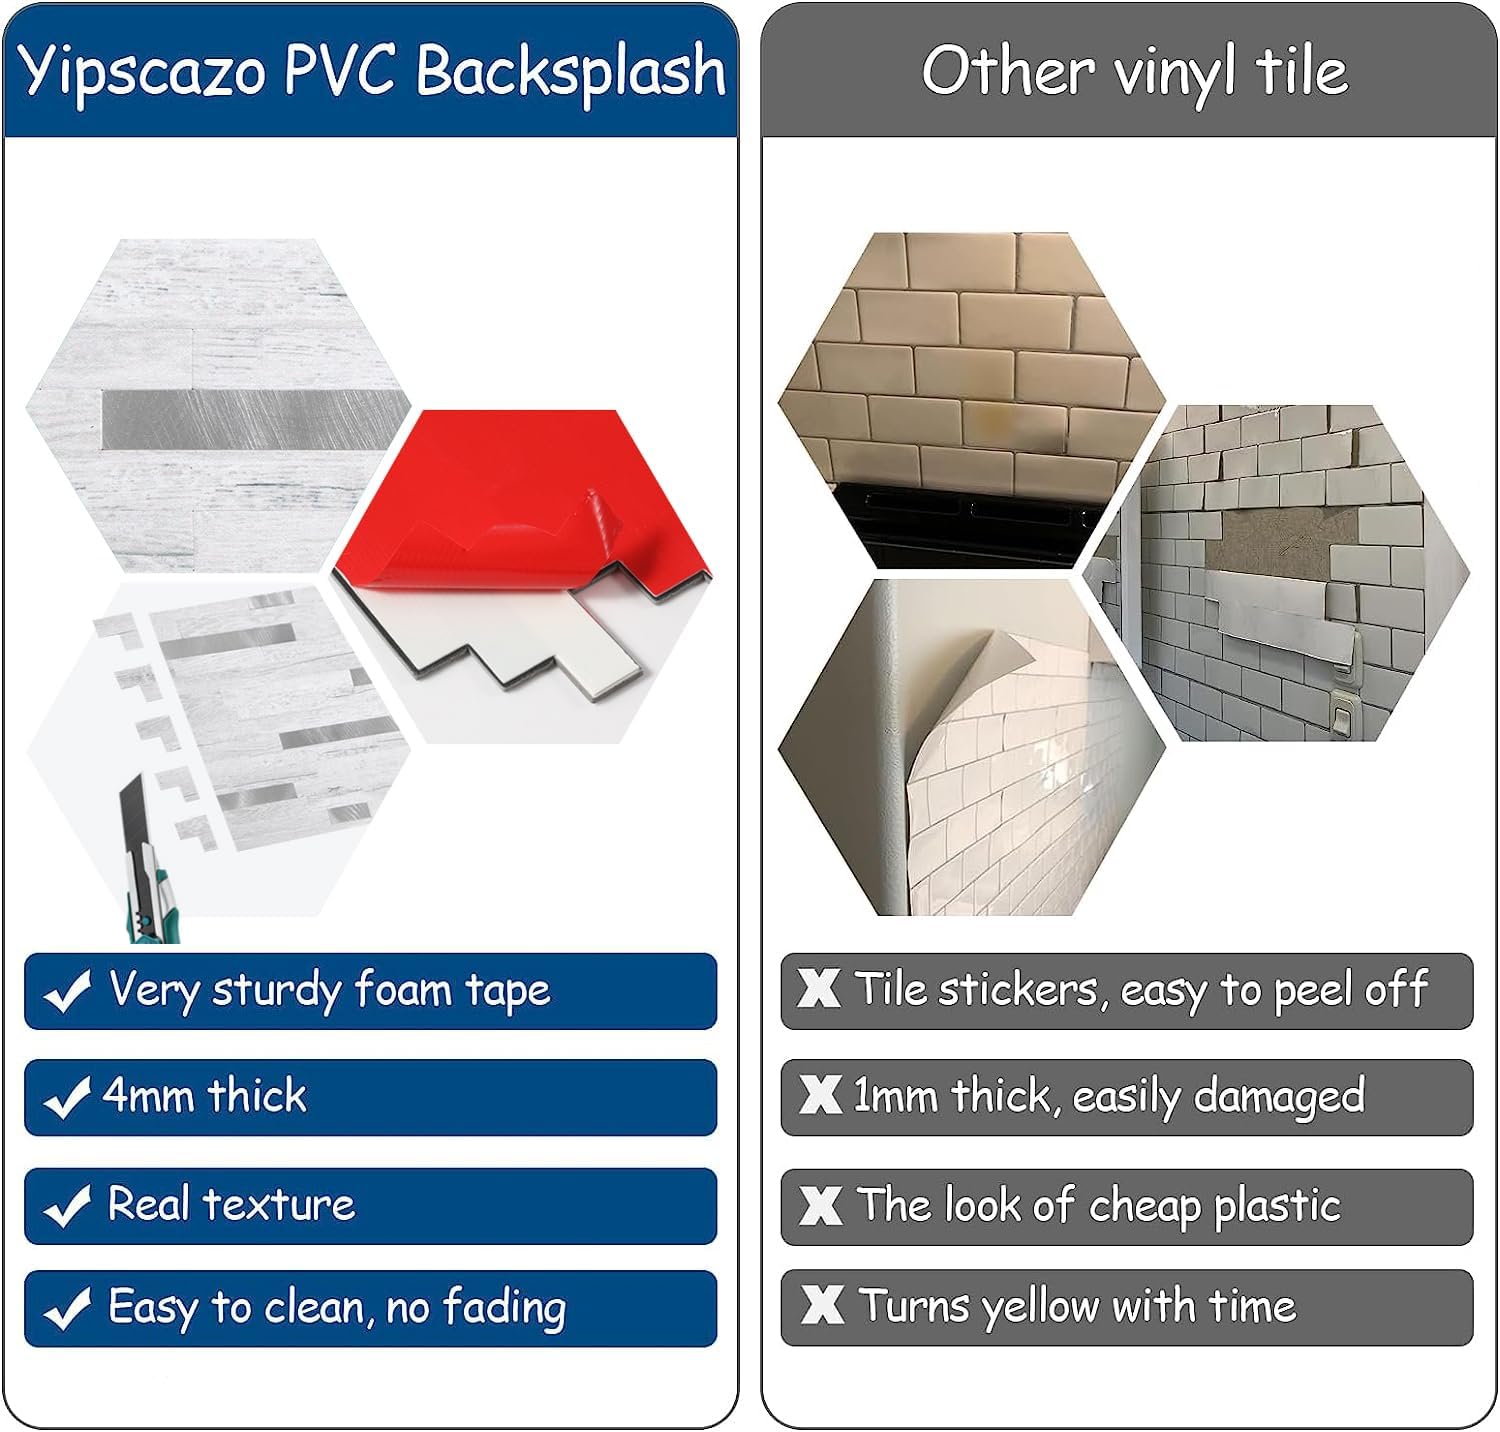 PVC backsplash ideas for kitchen Linear Blend in Teak Wood